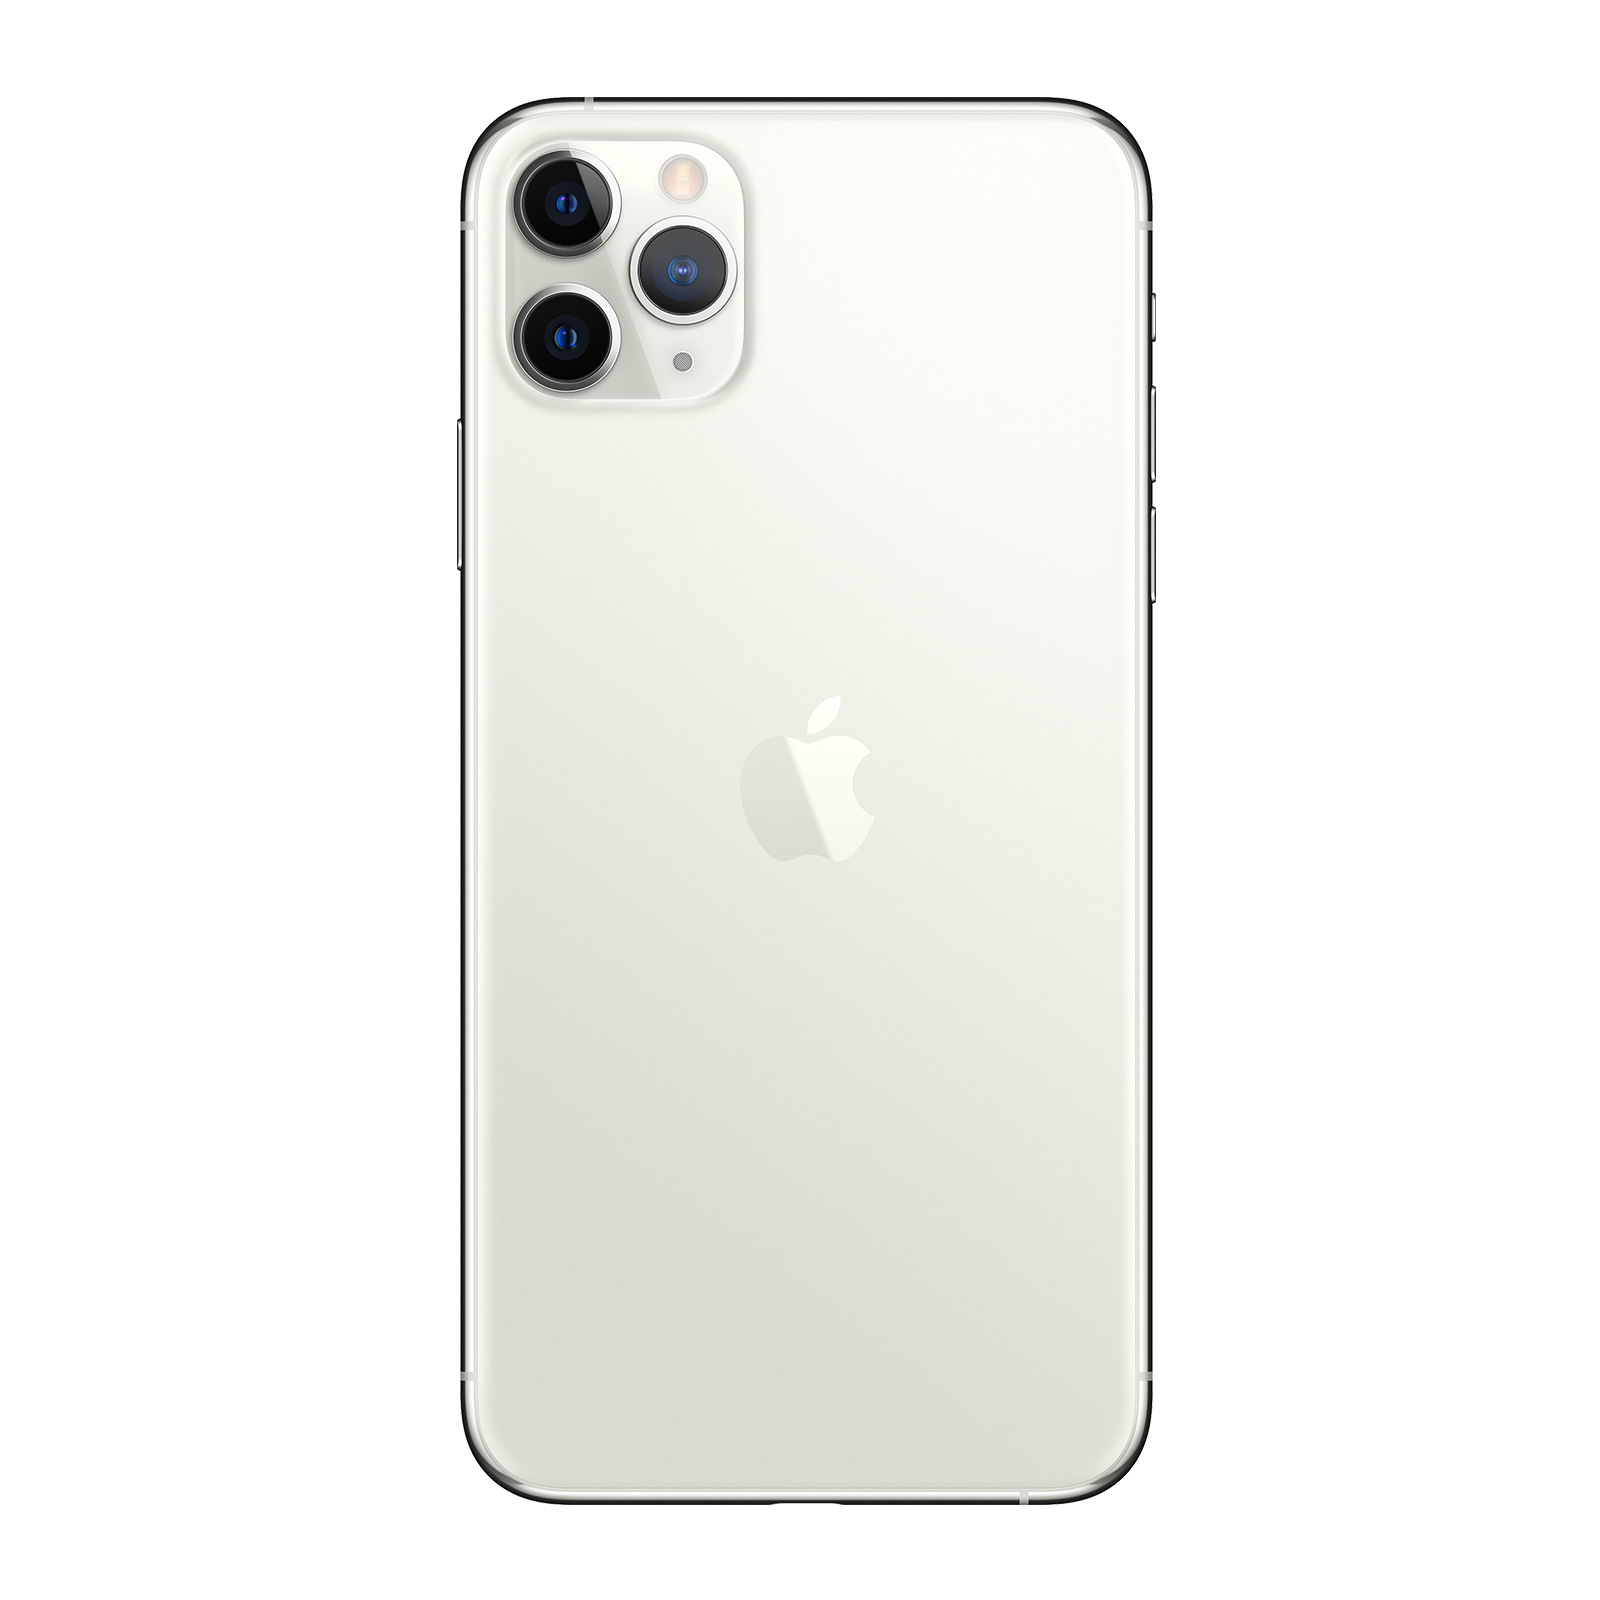 Apple iPhone 11 Pro Max 256GB Silver Very Good - Sprint